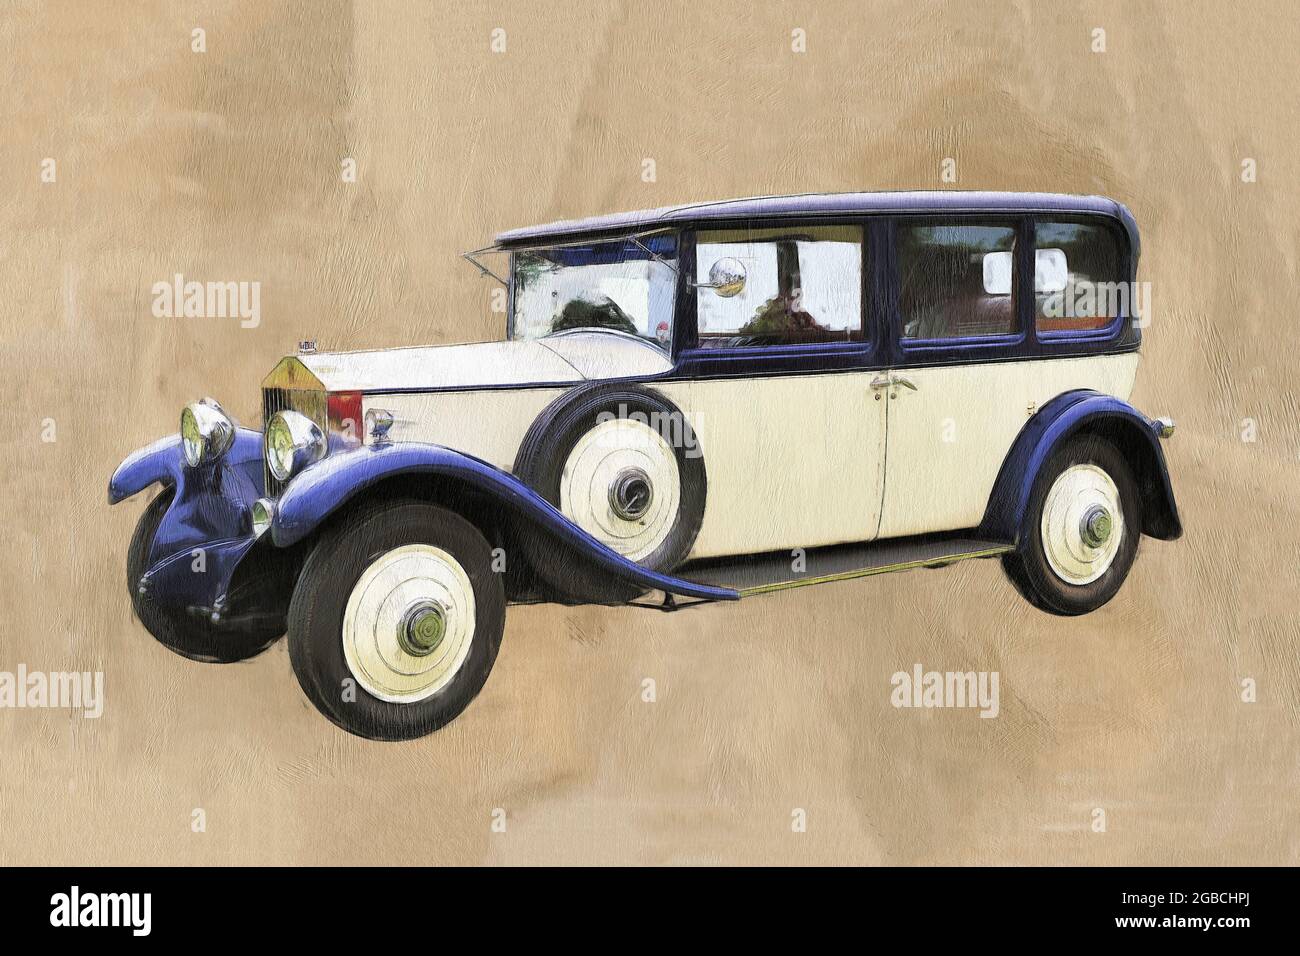 1929 Rolls Royce Phantom 1 klassische Limousine in lackierter und strukturierter Optik Stockfoto